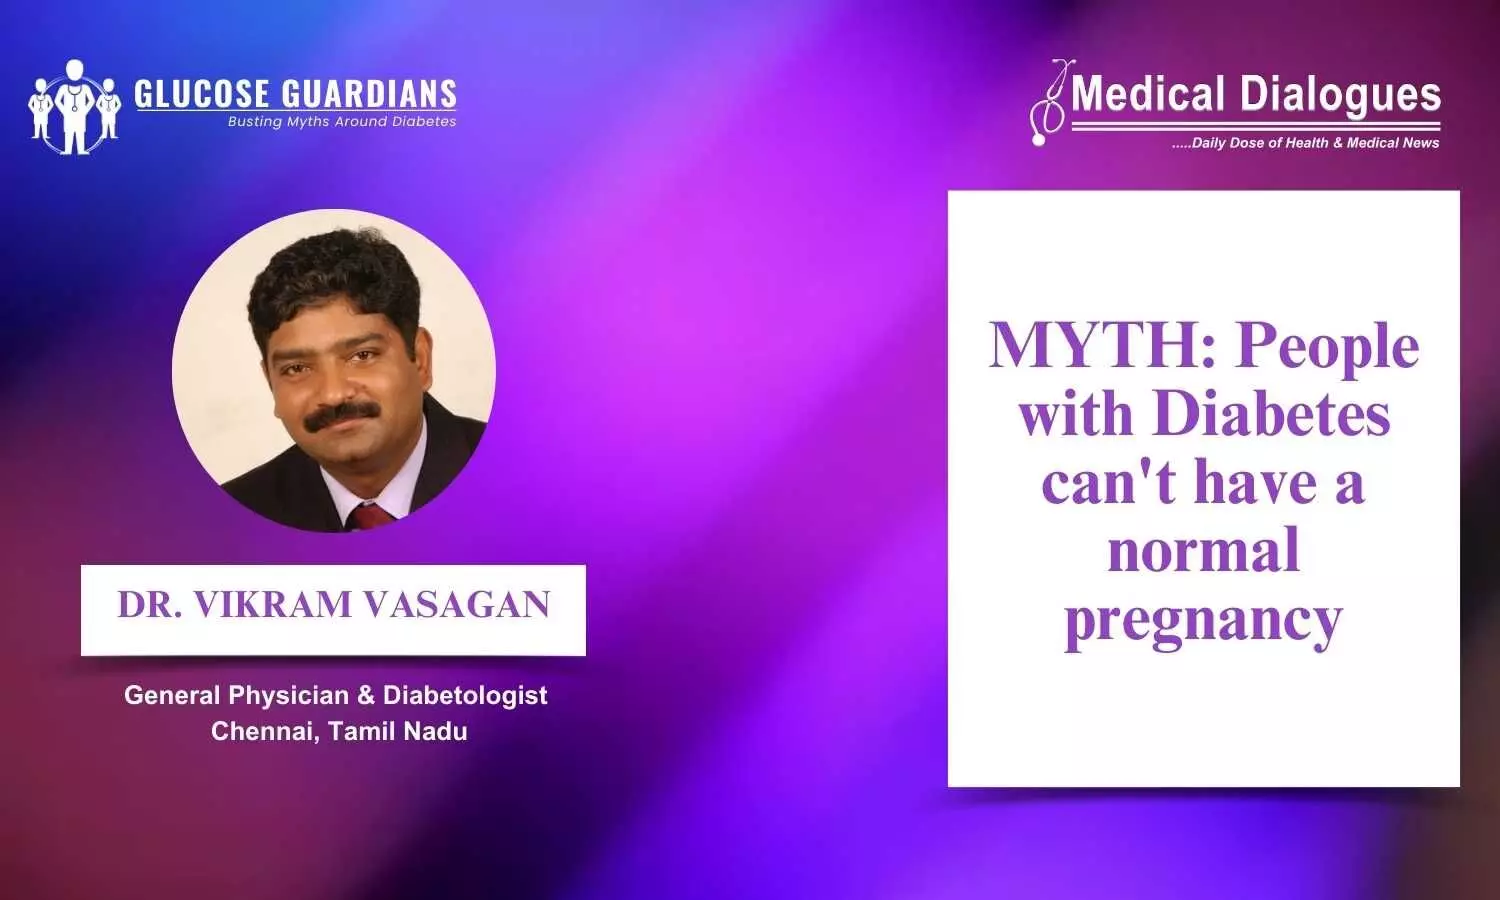 Understanding HbA1C Control and Pregnancy Risks in Diabetes - Dr Vikram Vasagan